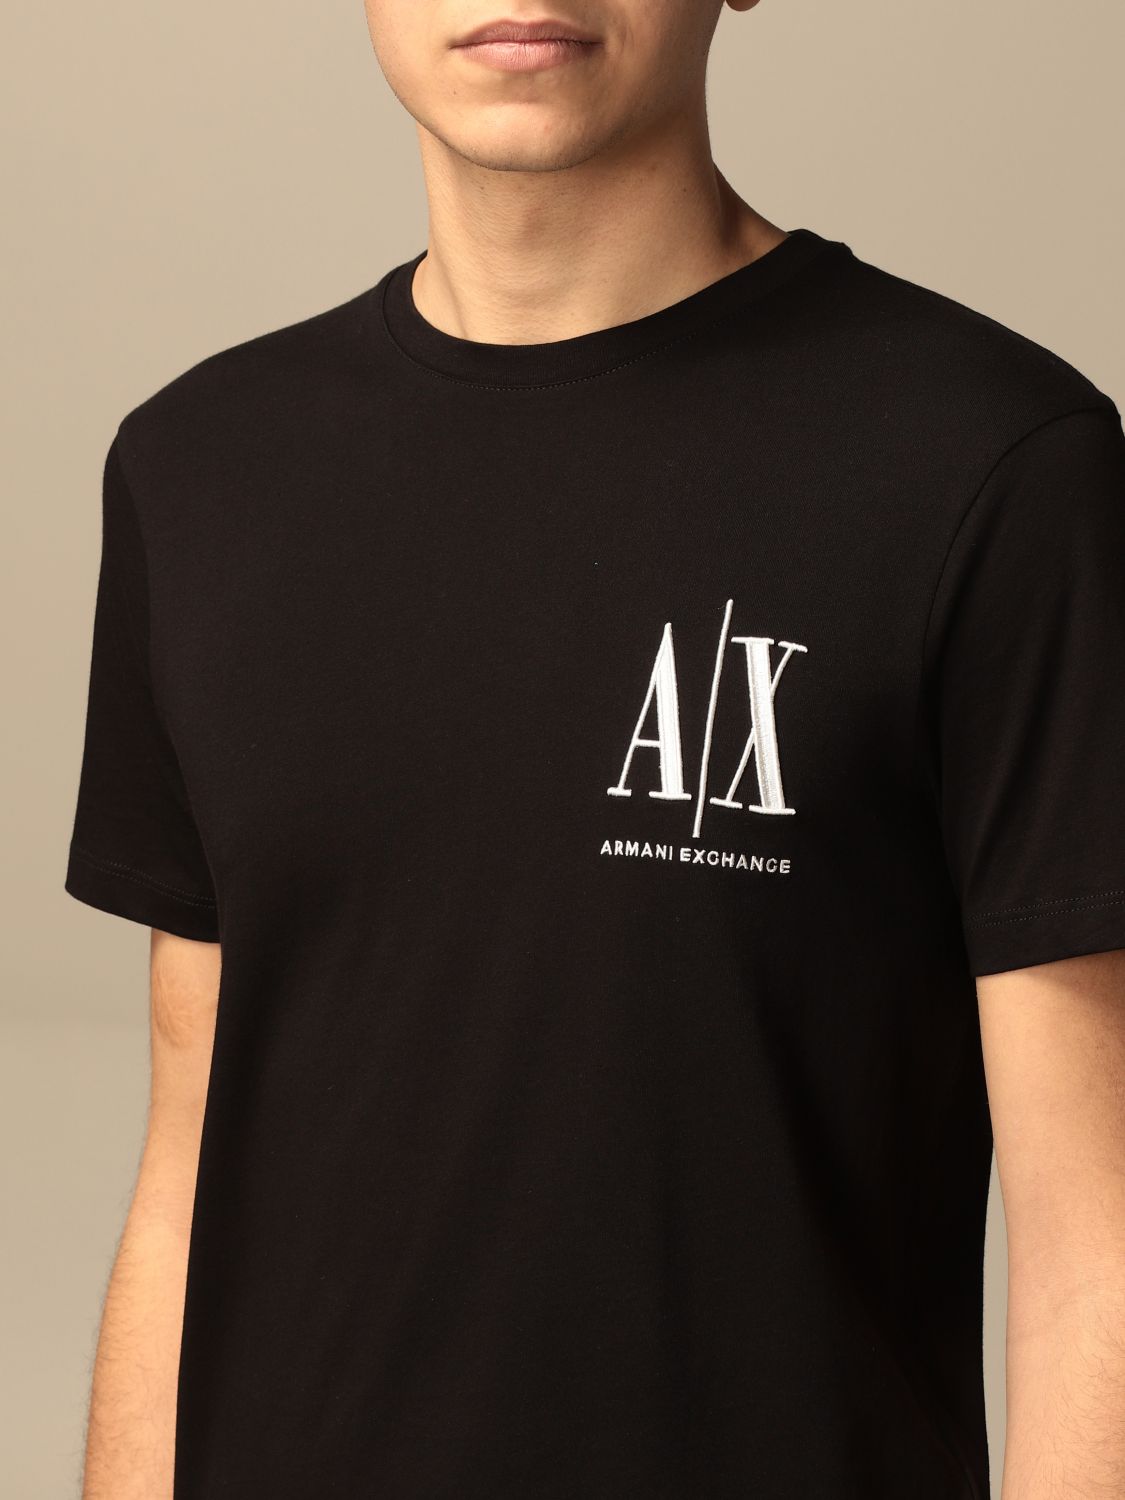 ARMANI EXCHANGE: T-shirt with logo - Black | T-Shirt Armani Exchange ...